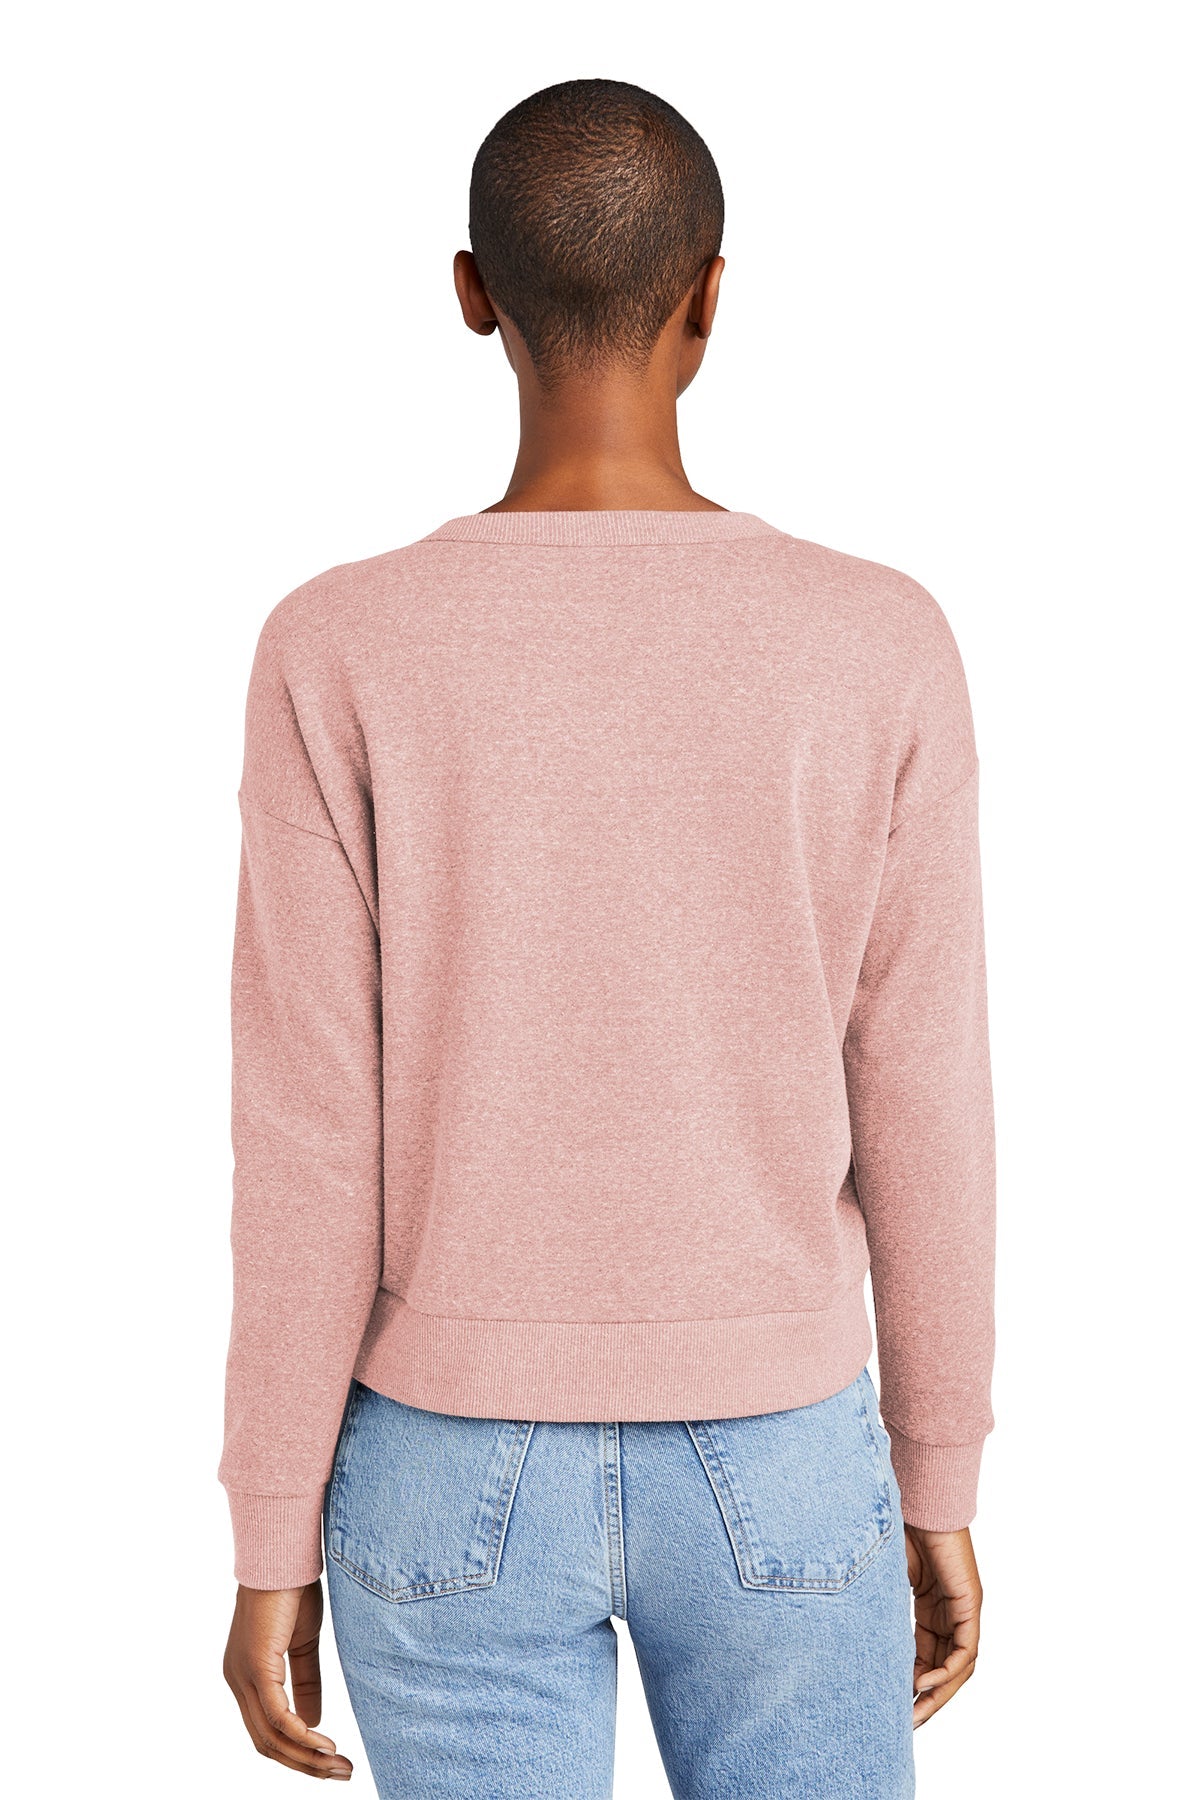 DT1312 District® Women’s Perfect Tri® Fleece V-Neck Sweatshirt